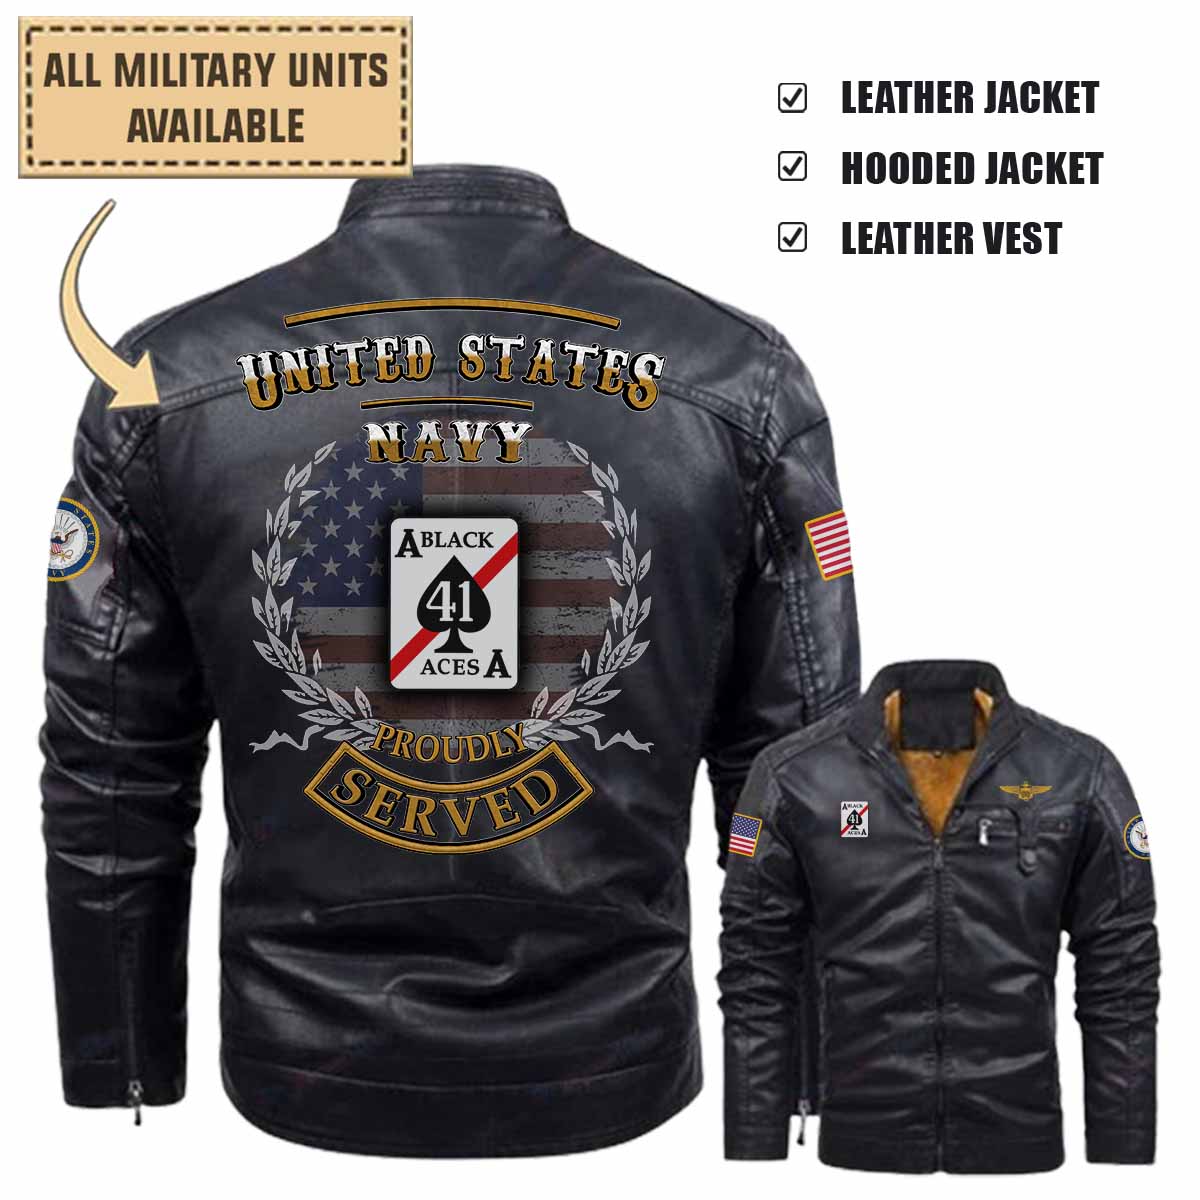 vf 41 black acesleather jacket and vest t2cnc